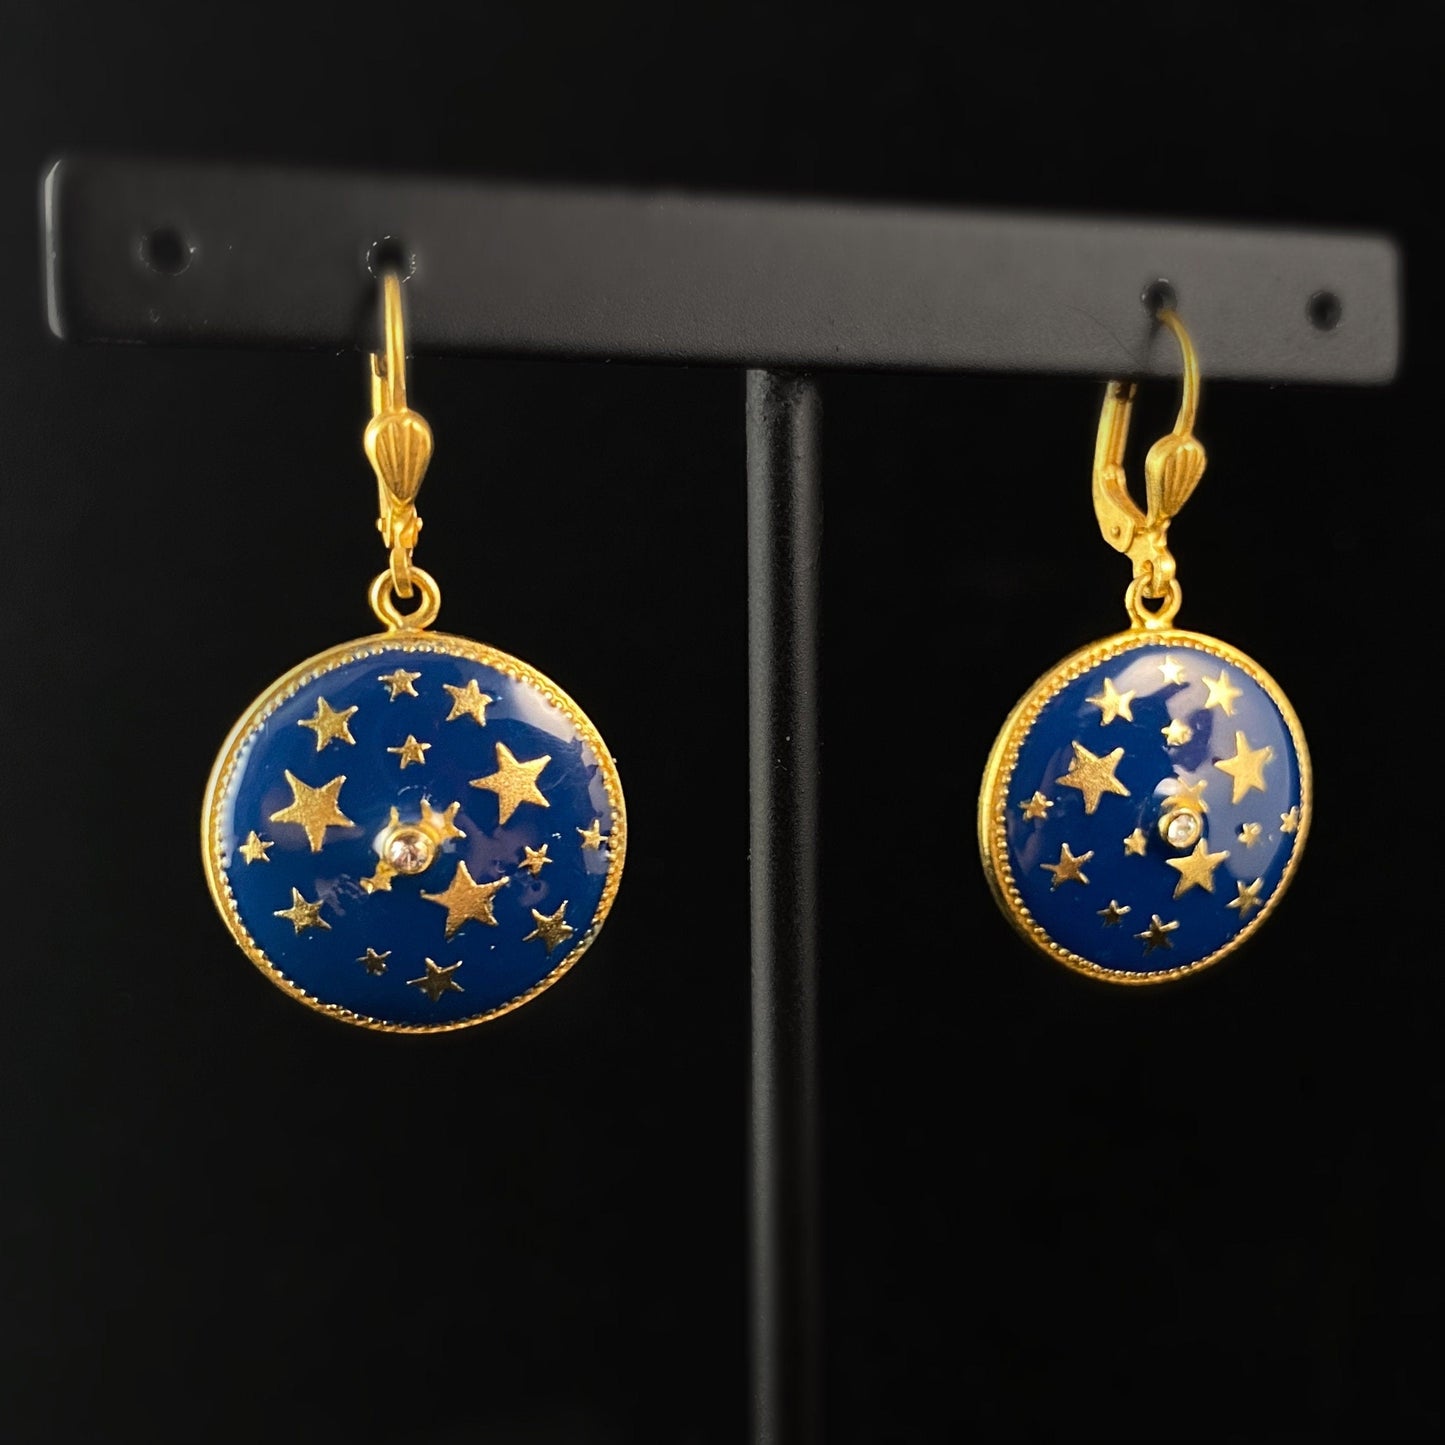 Enamel Star Earrings with Clear Swarovski Crystal - La Vie Parisienne by Catherine Popesco